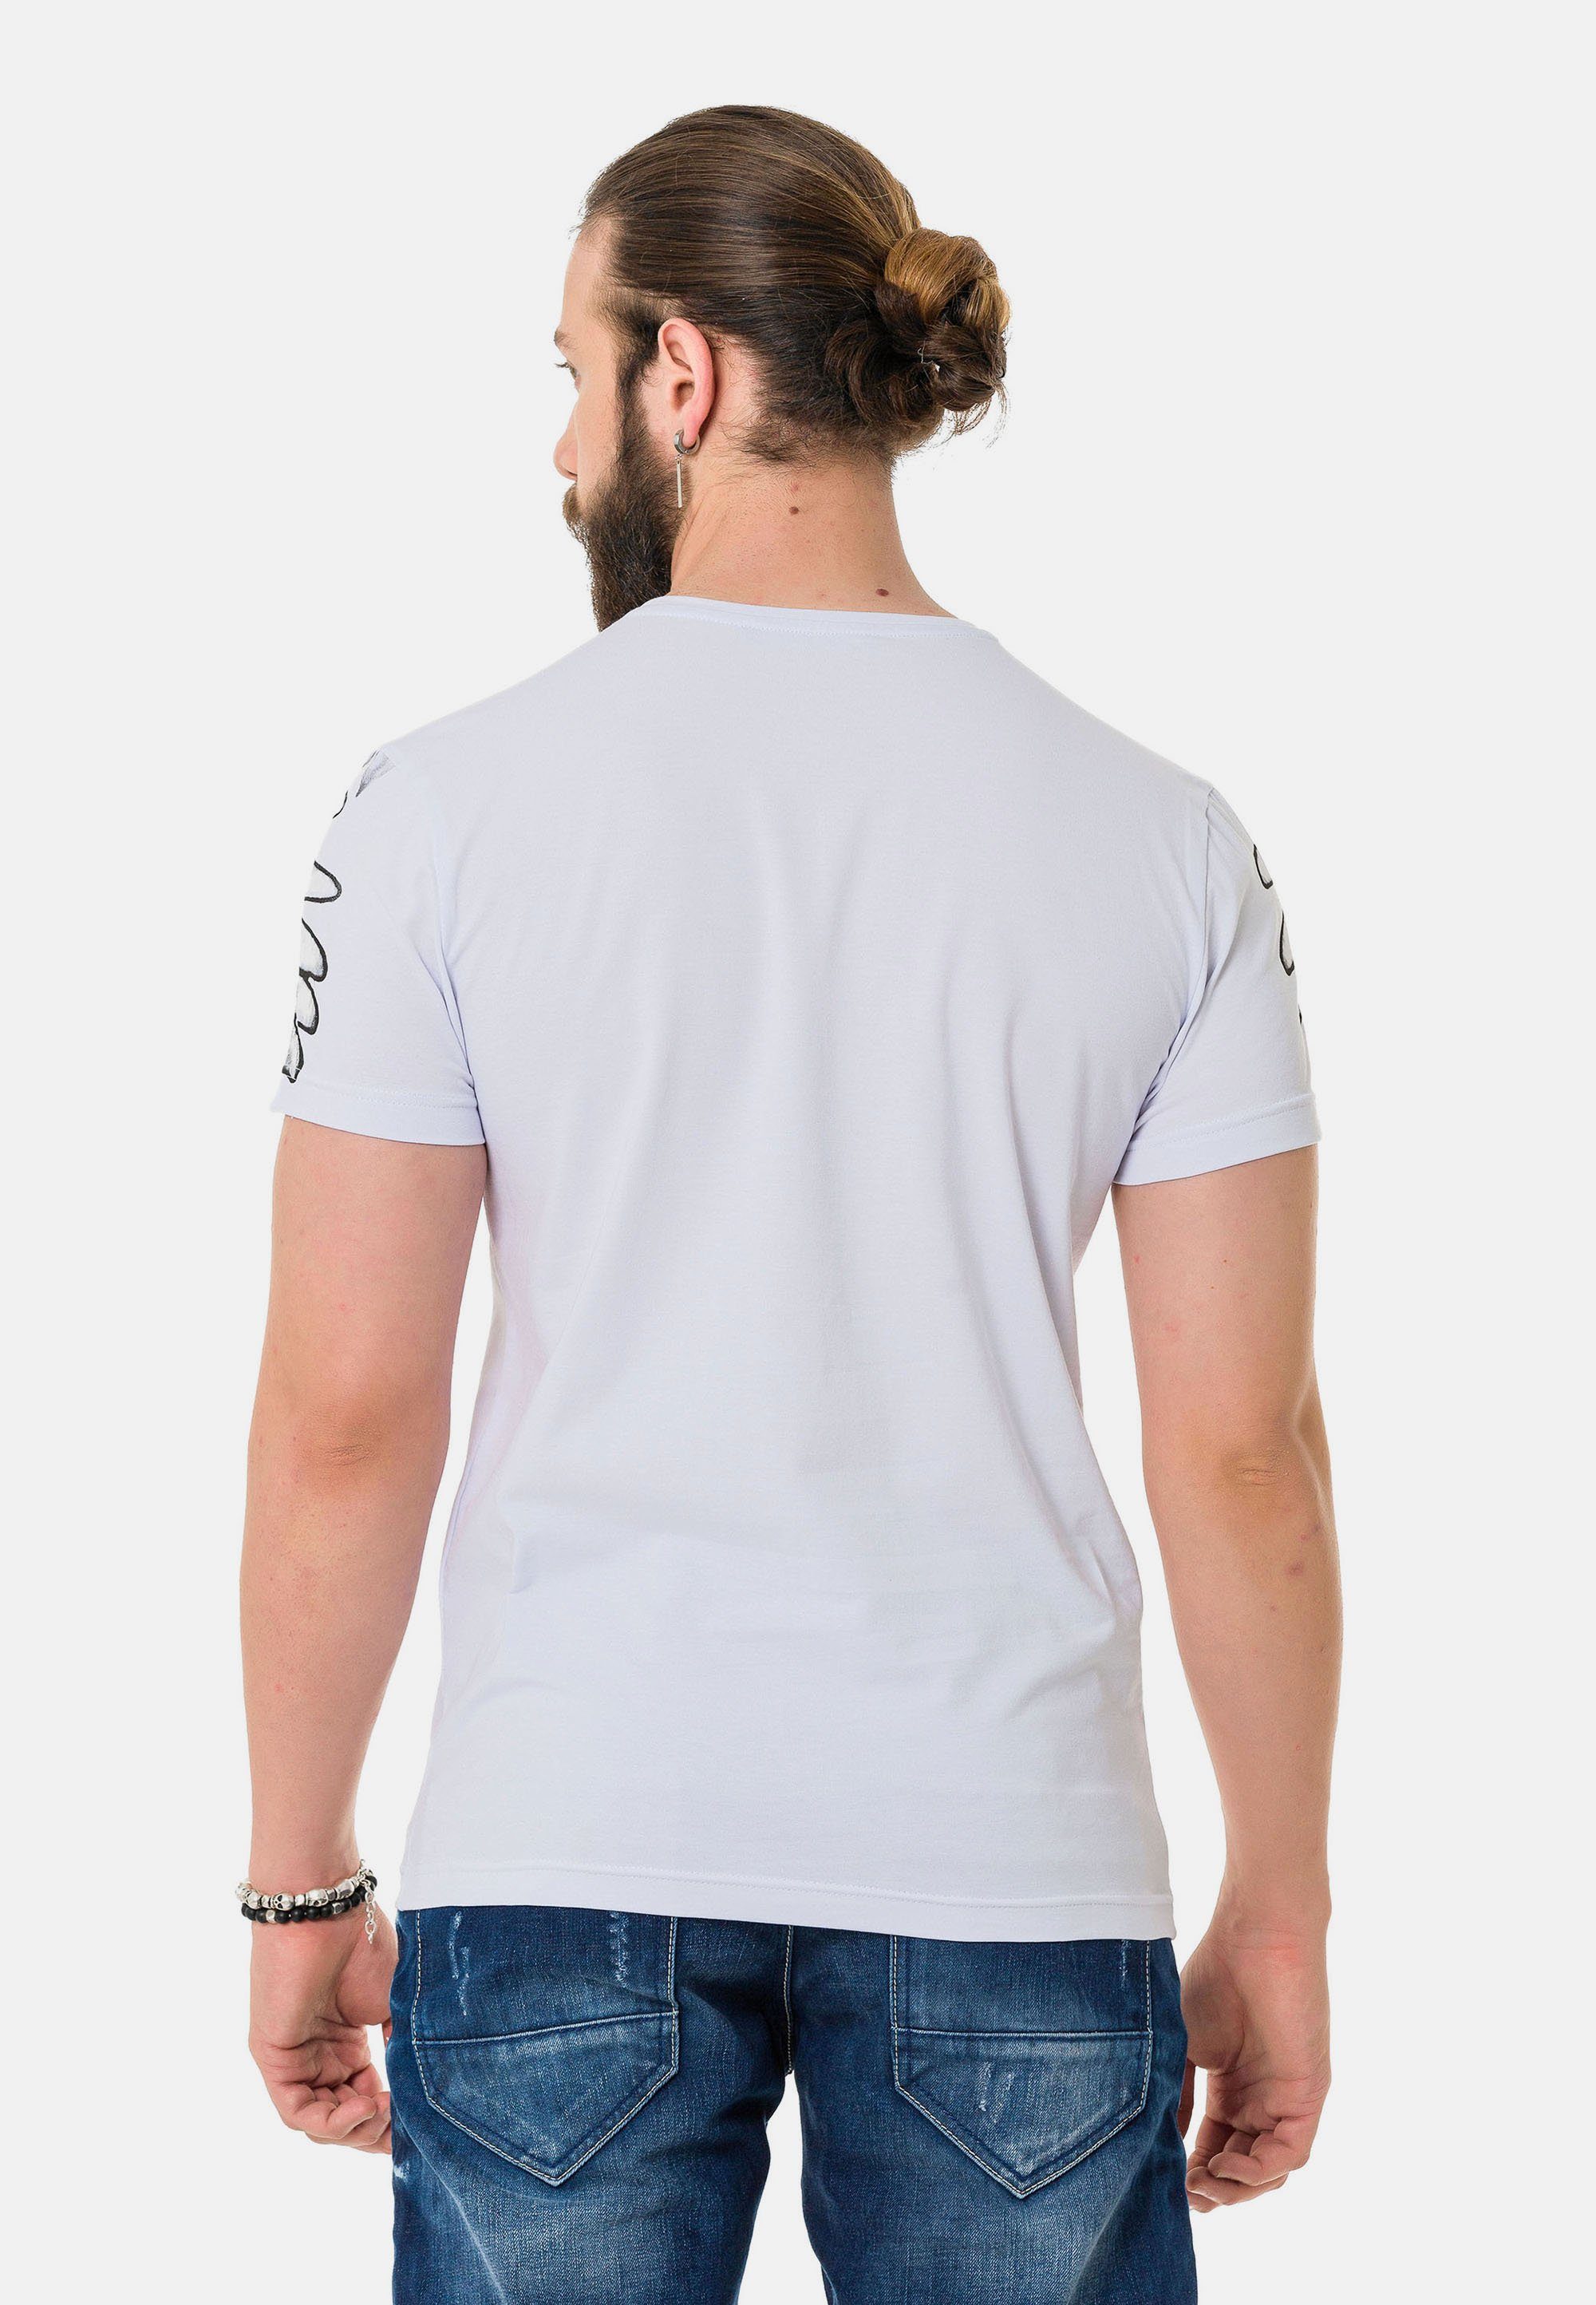 Baxx Look in weiß & Cipo rockigem T-Shirt